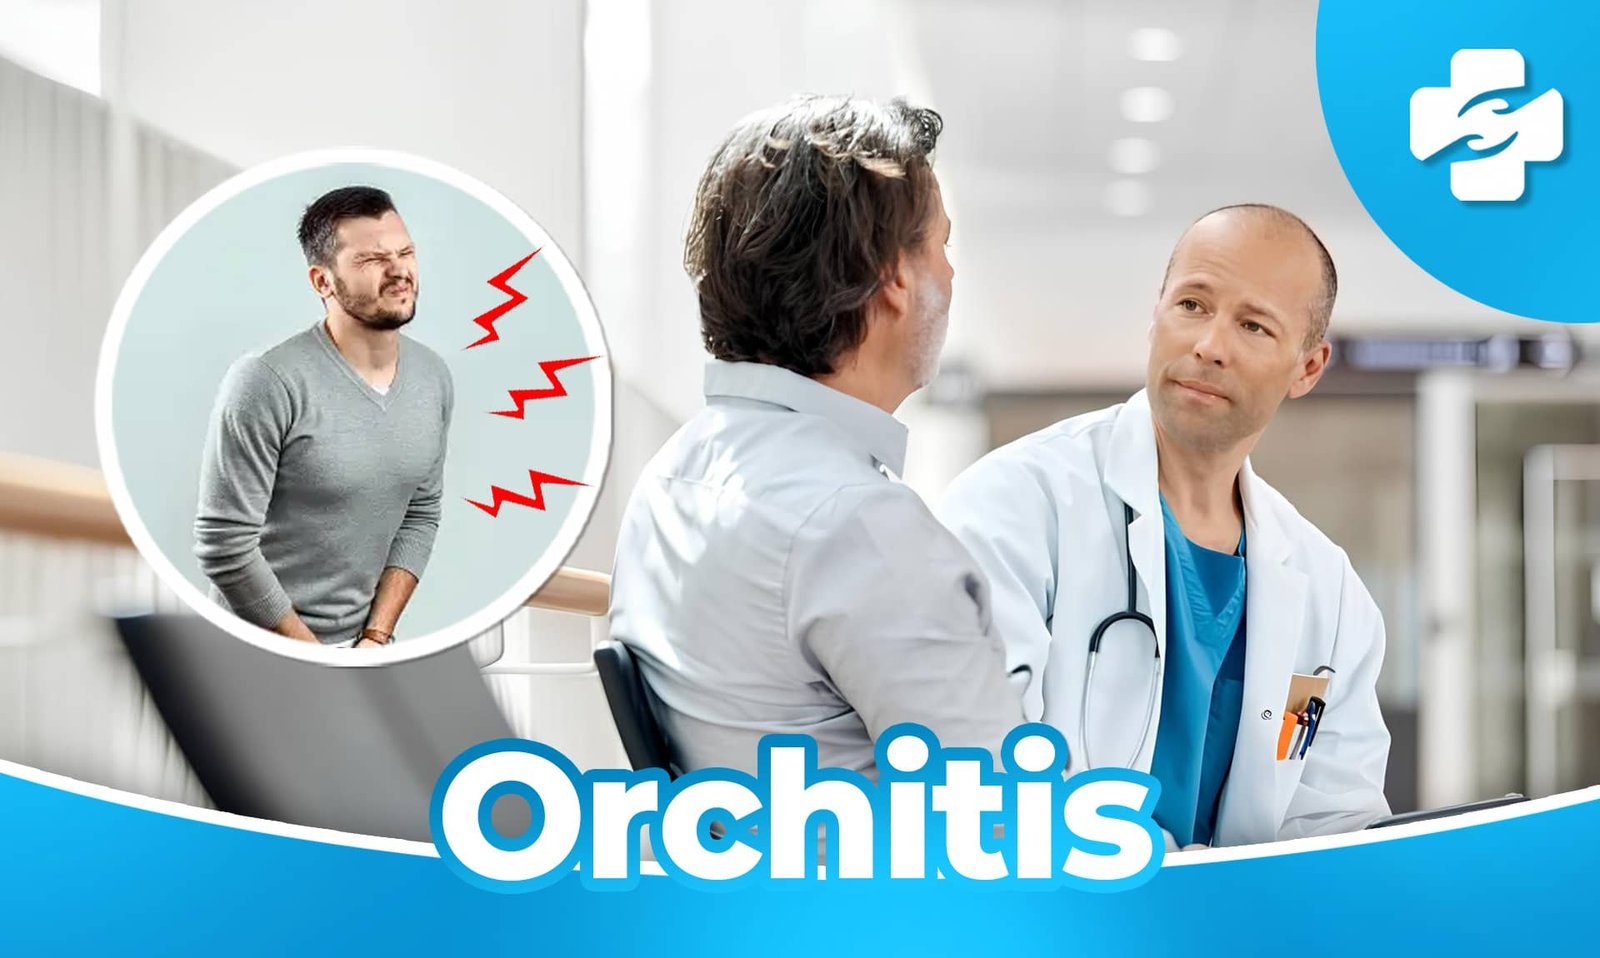 Pengobatan orkitis (Orchitis) - Klinik Utama Sentosa